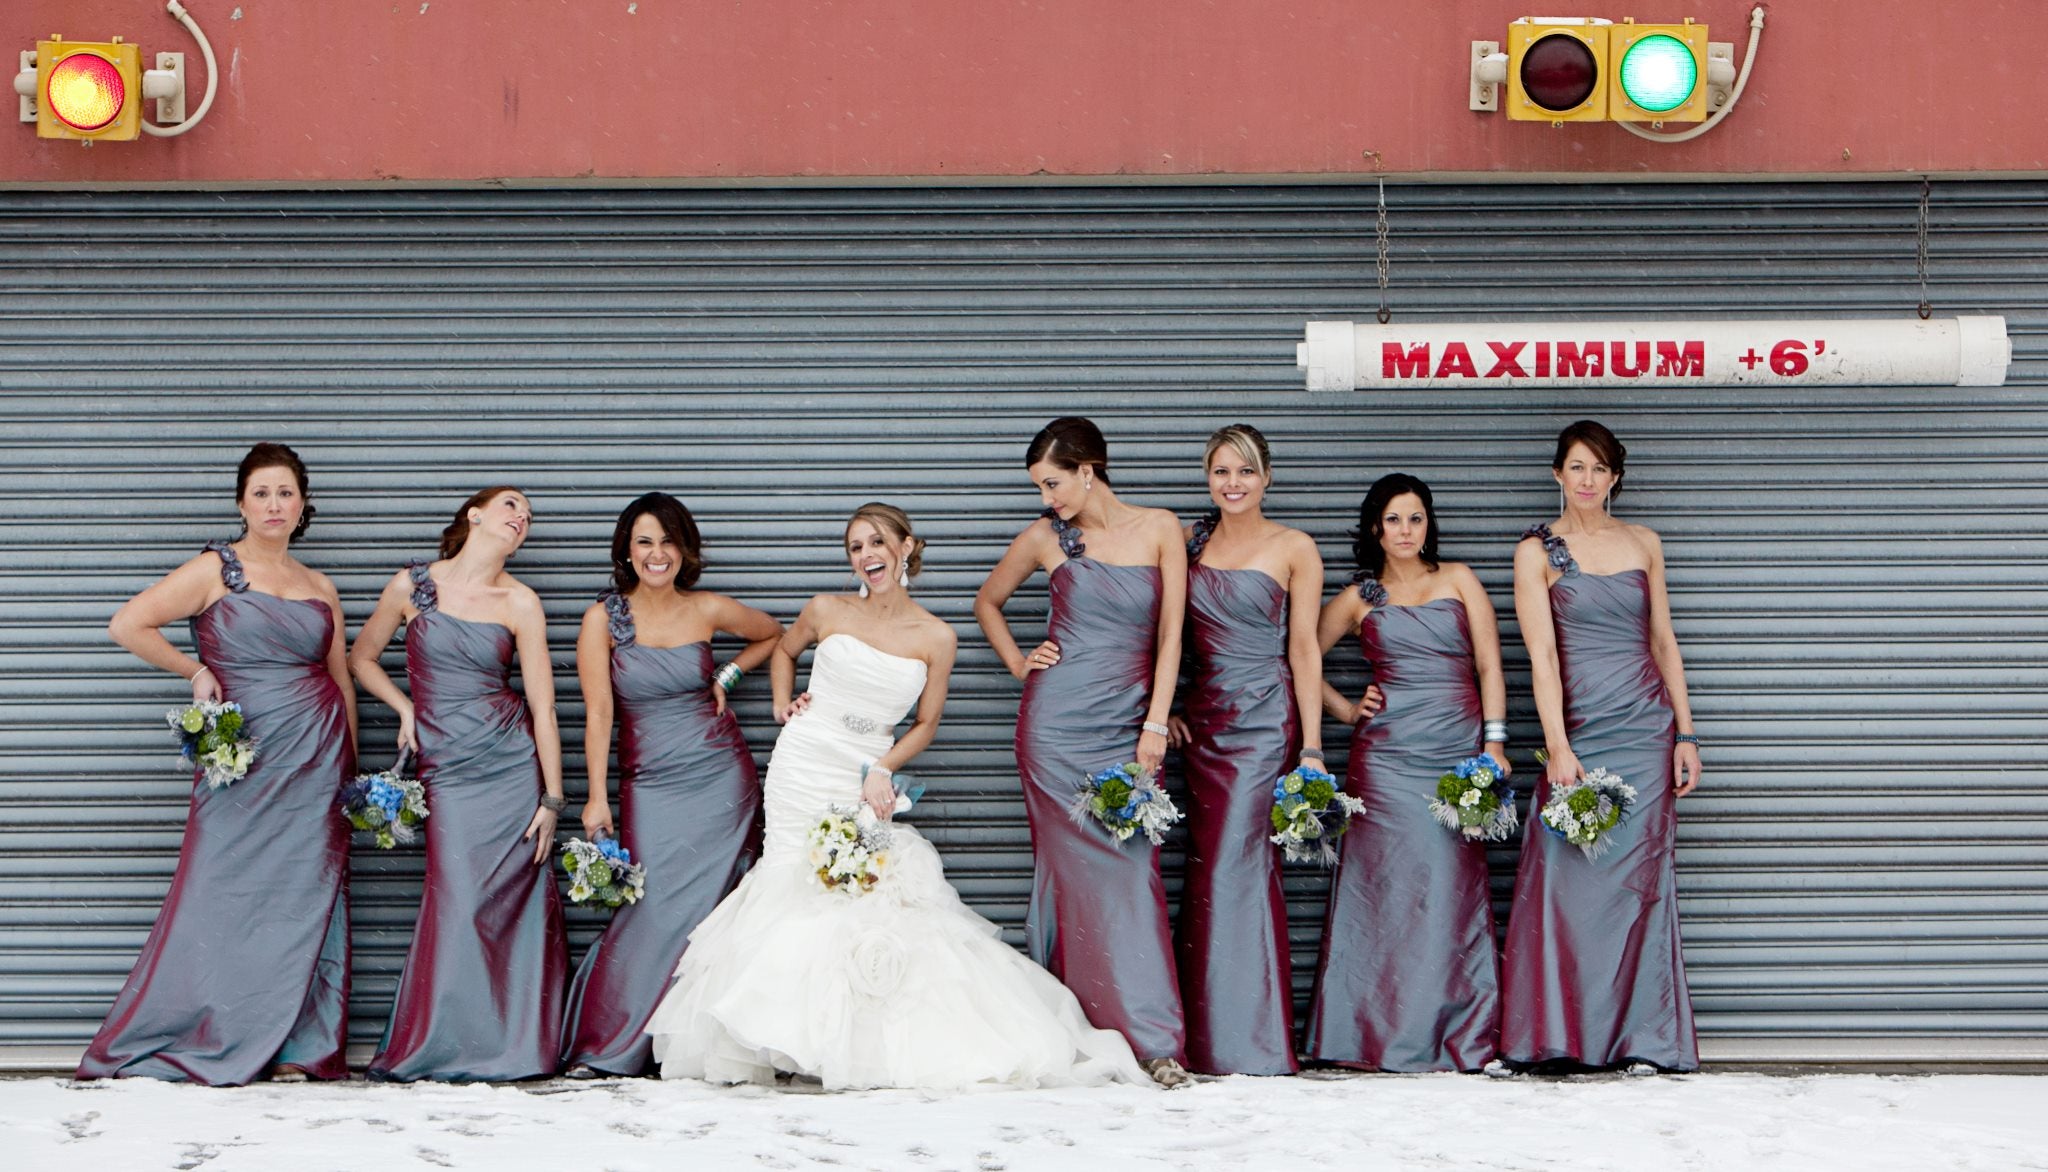 Stacy K Snapshot: Winter Wedding, Anyone? | Rochester NY Wedding Florist